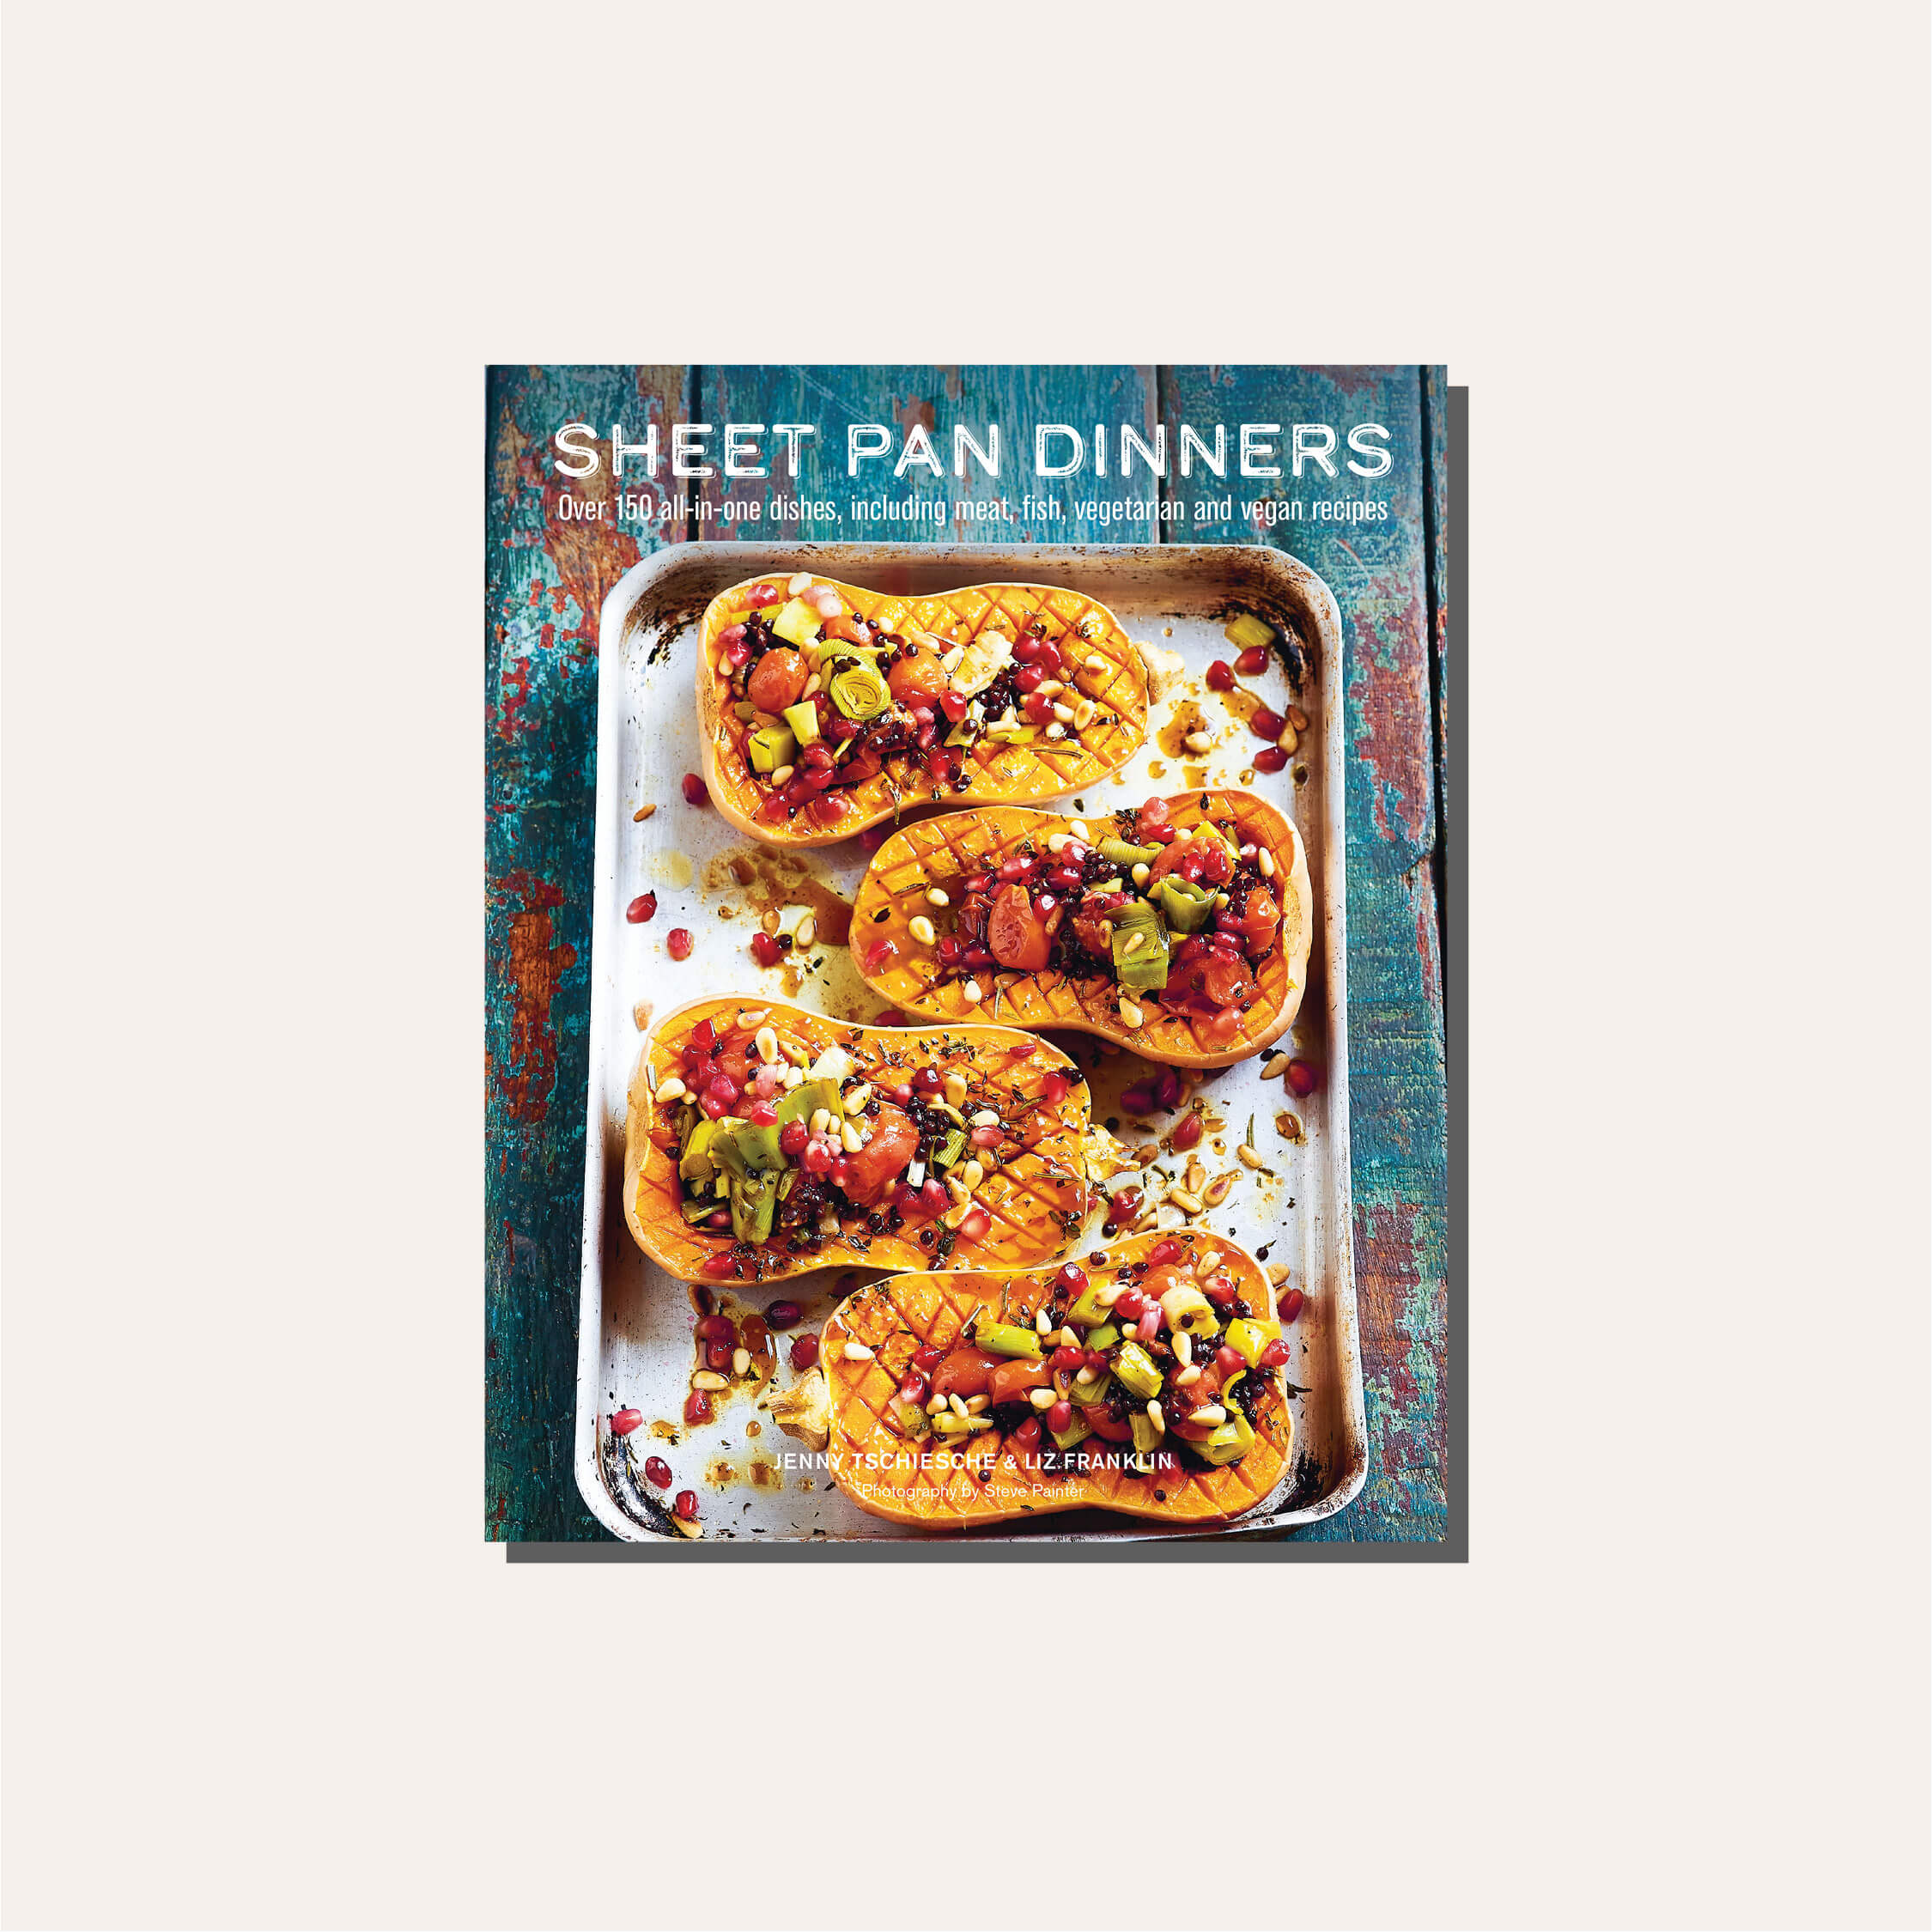 A cookbook cover in a light frame.